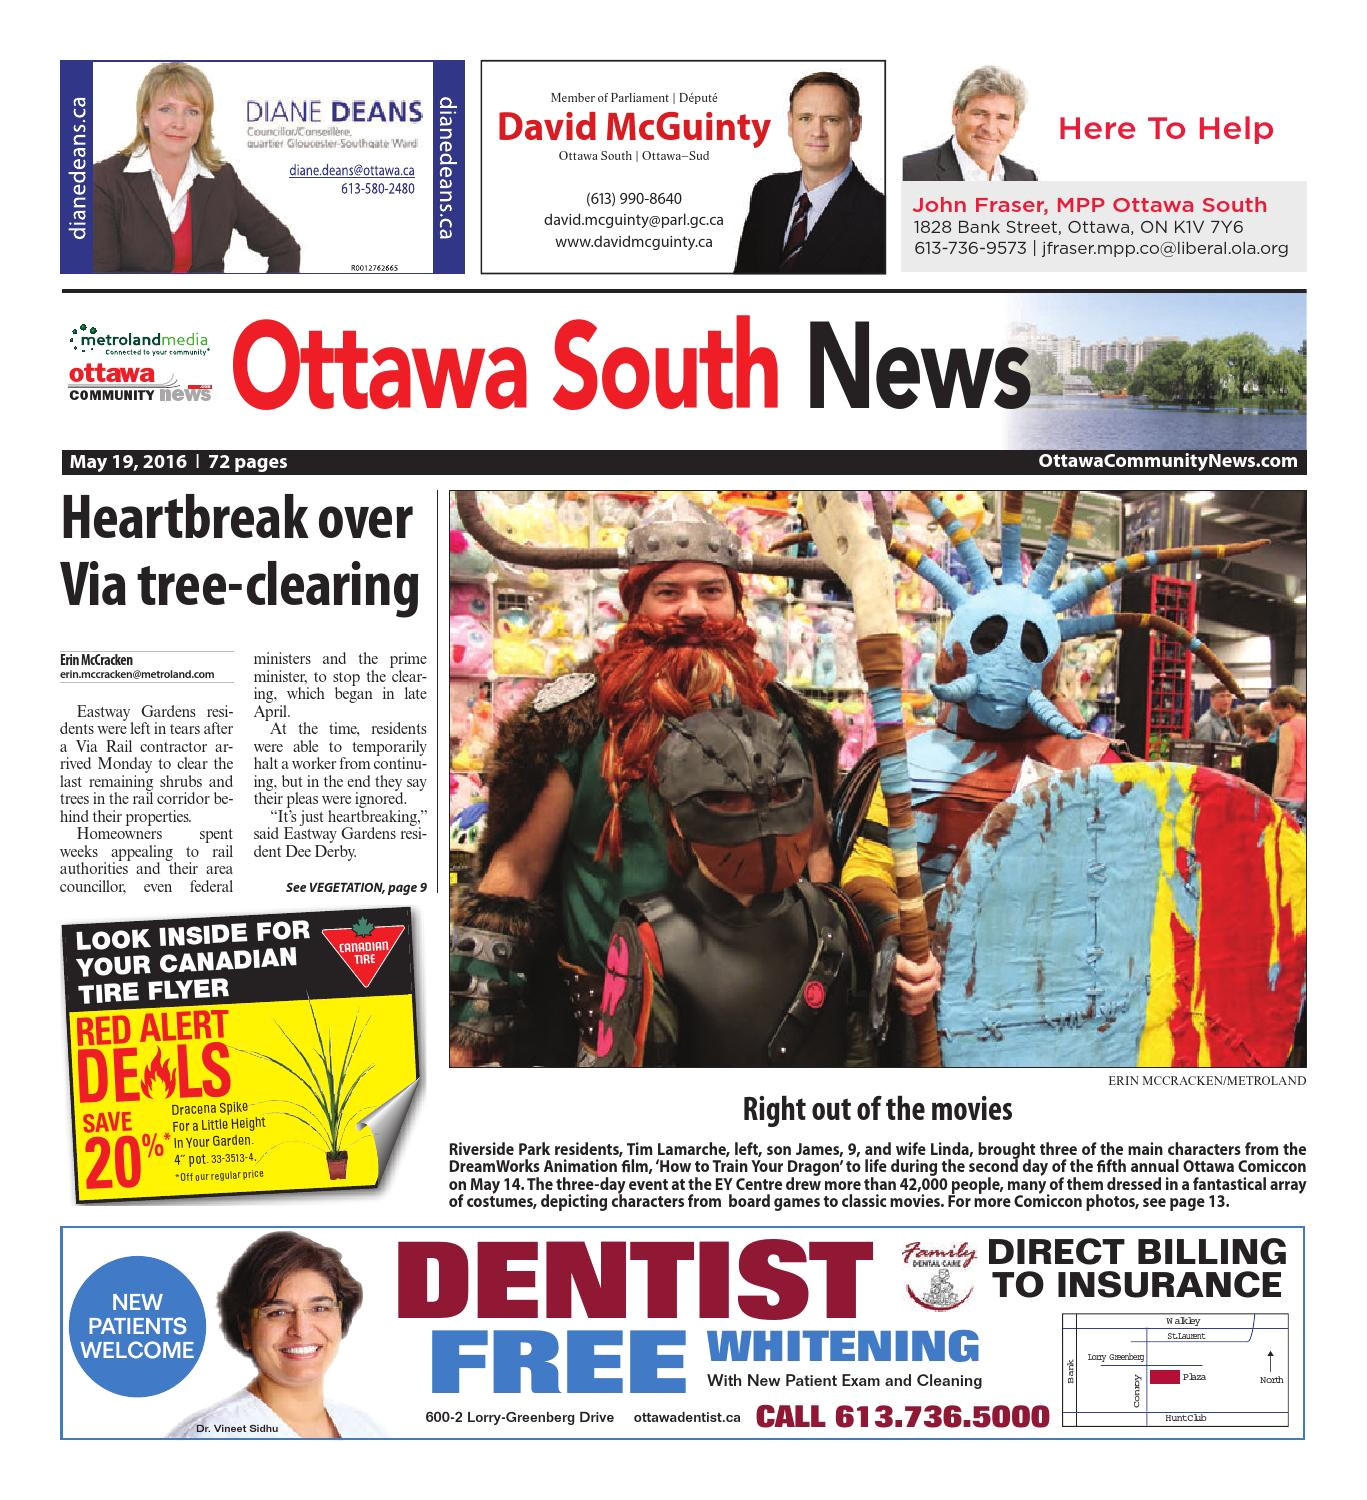 Grand Manan Real Estate Daniel Frost Ottawasouth051916 by Metroland East Ottawa south News issuu